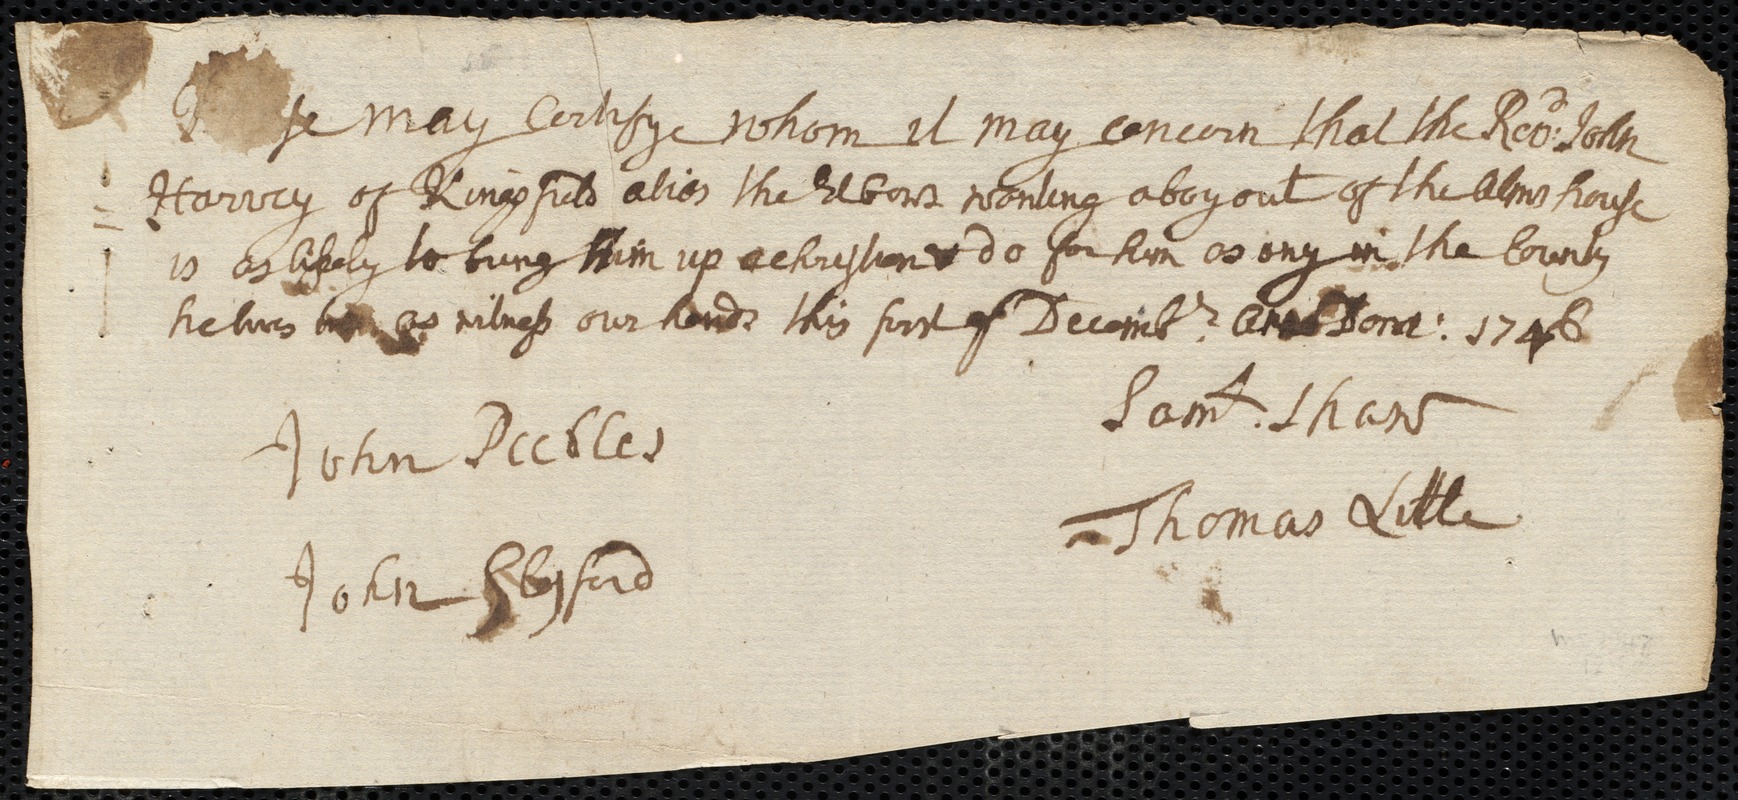 John Kelly indentured to apprentice with John Harvey of Kingsfield, 25 December 1746